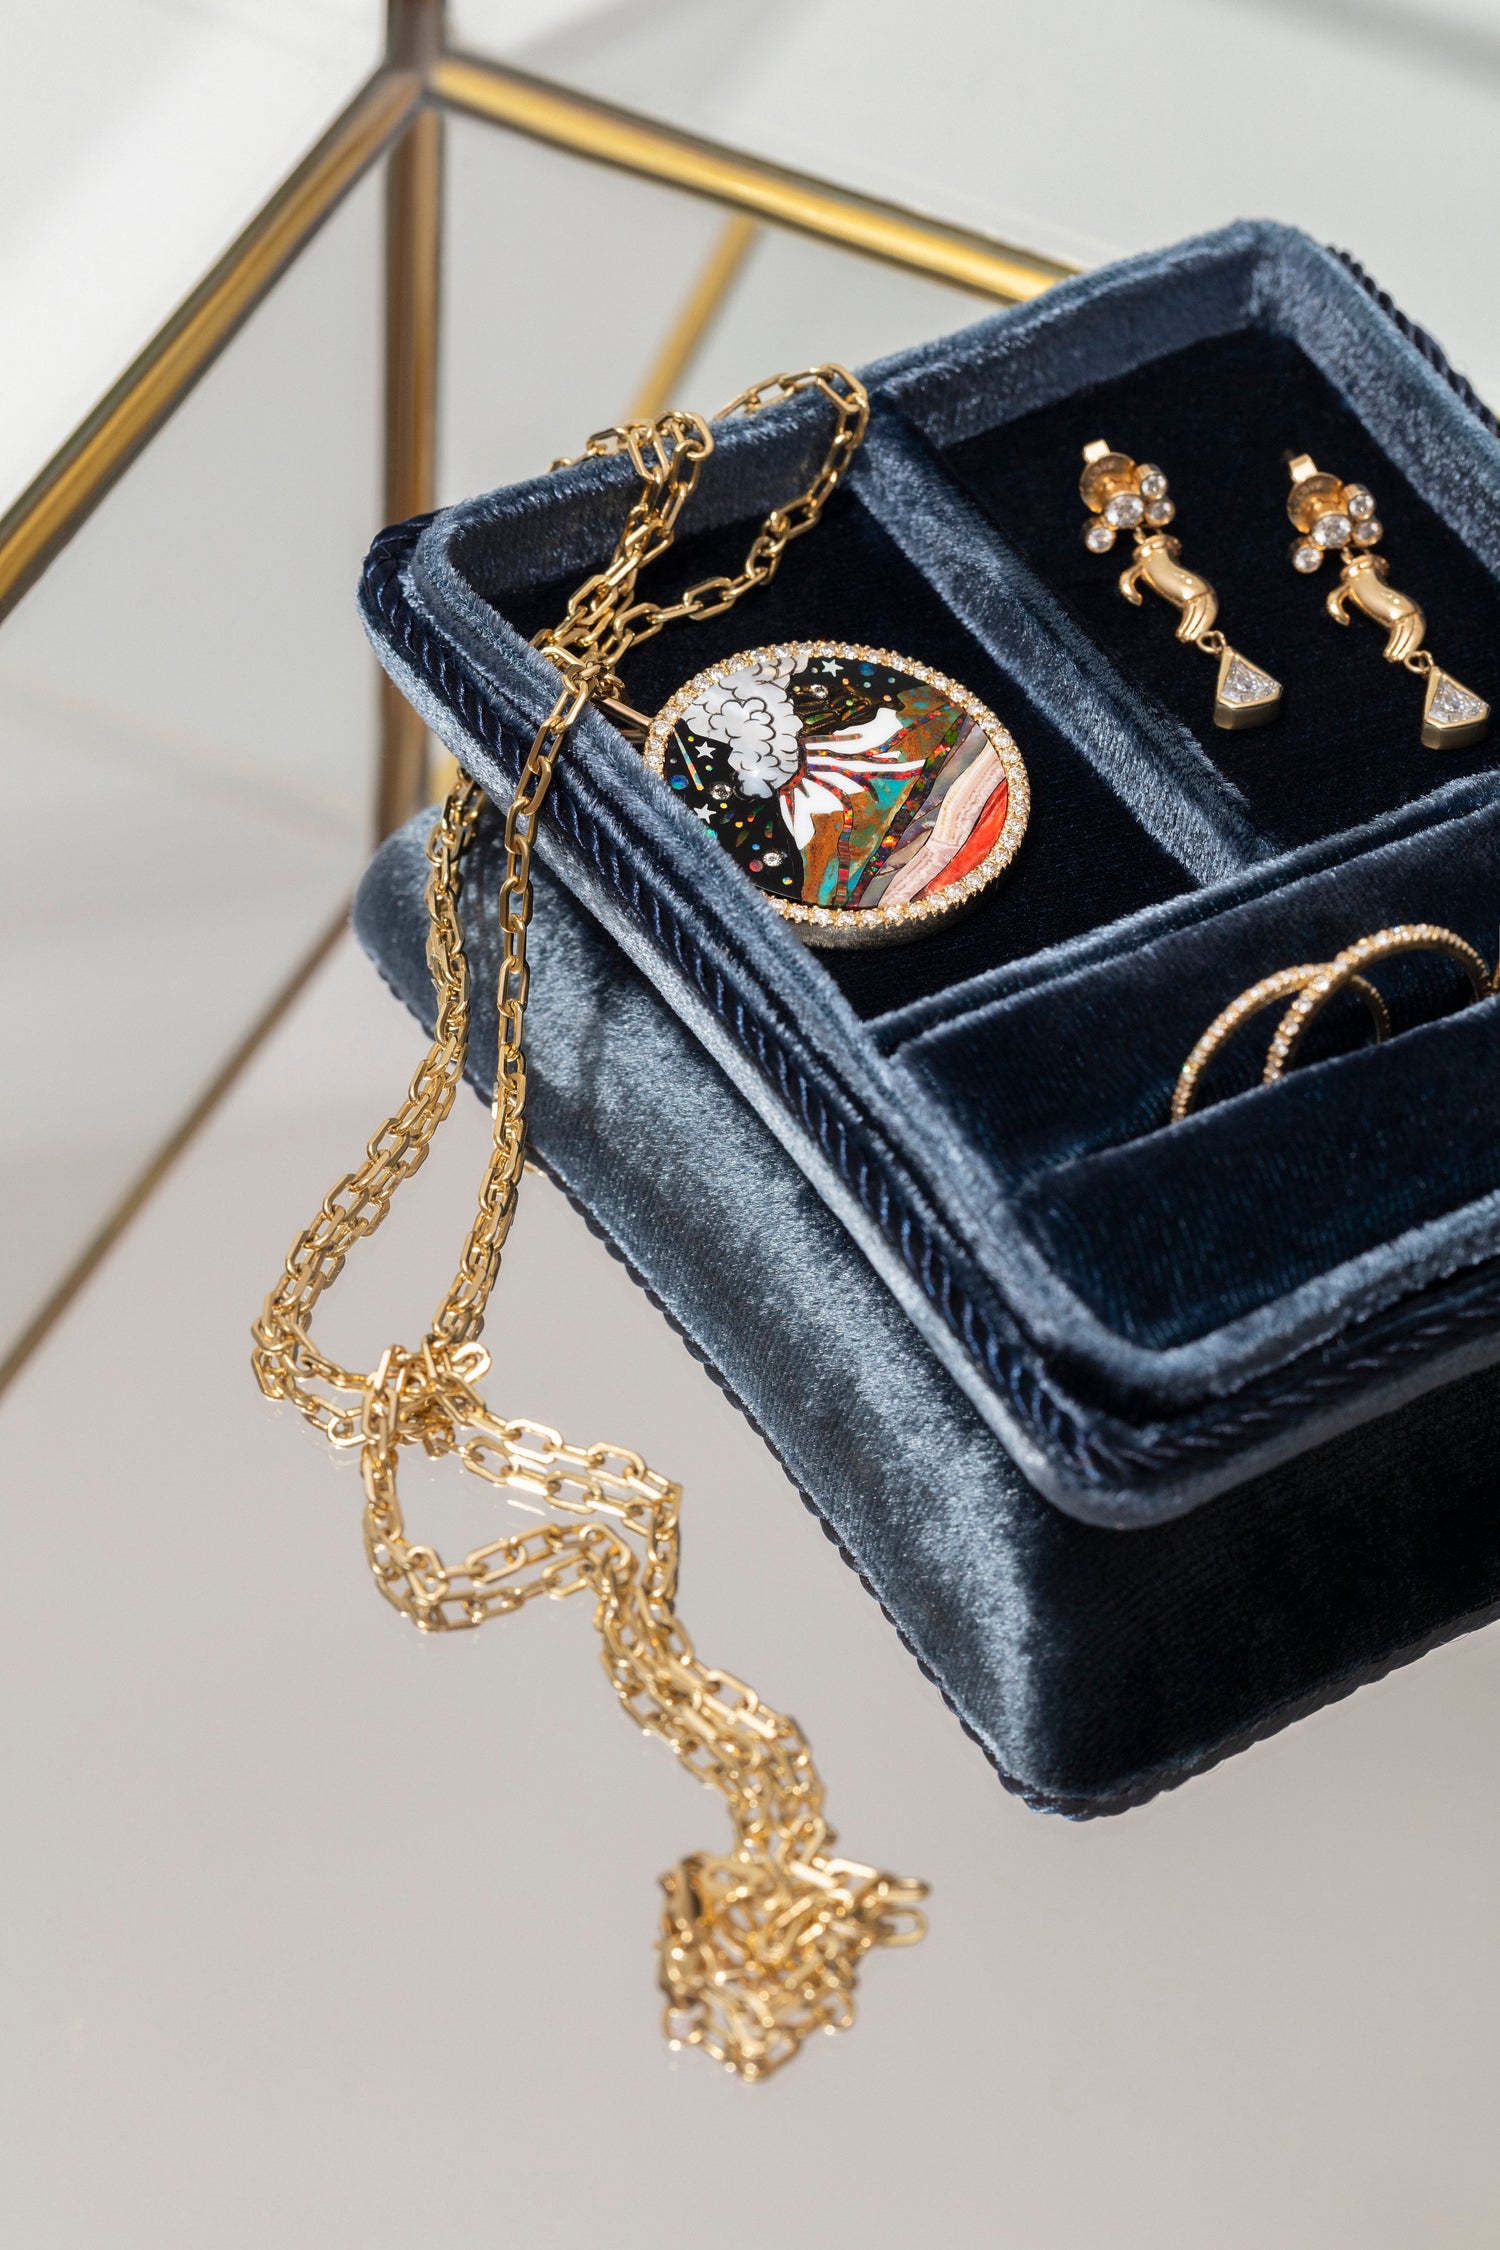 Carlota Travel Jewelry Box – Gala is Love